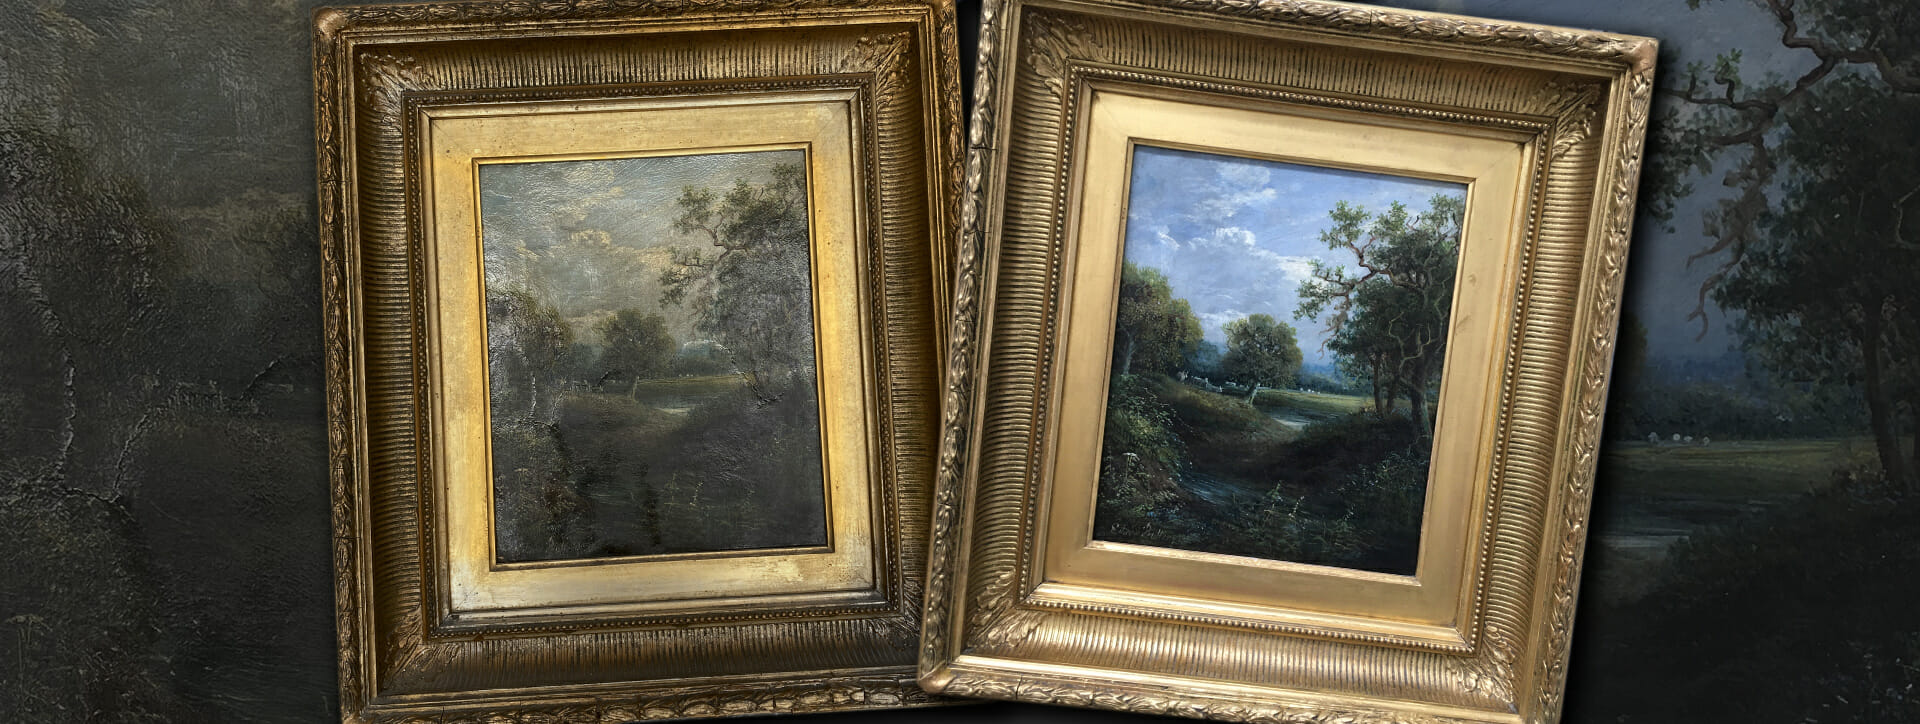 Small landscape painting frame restoration